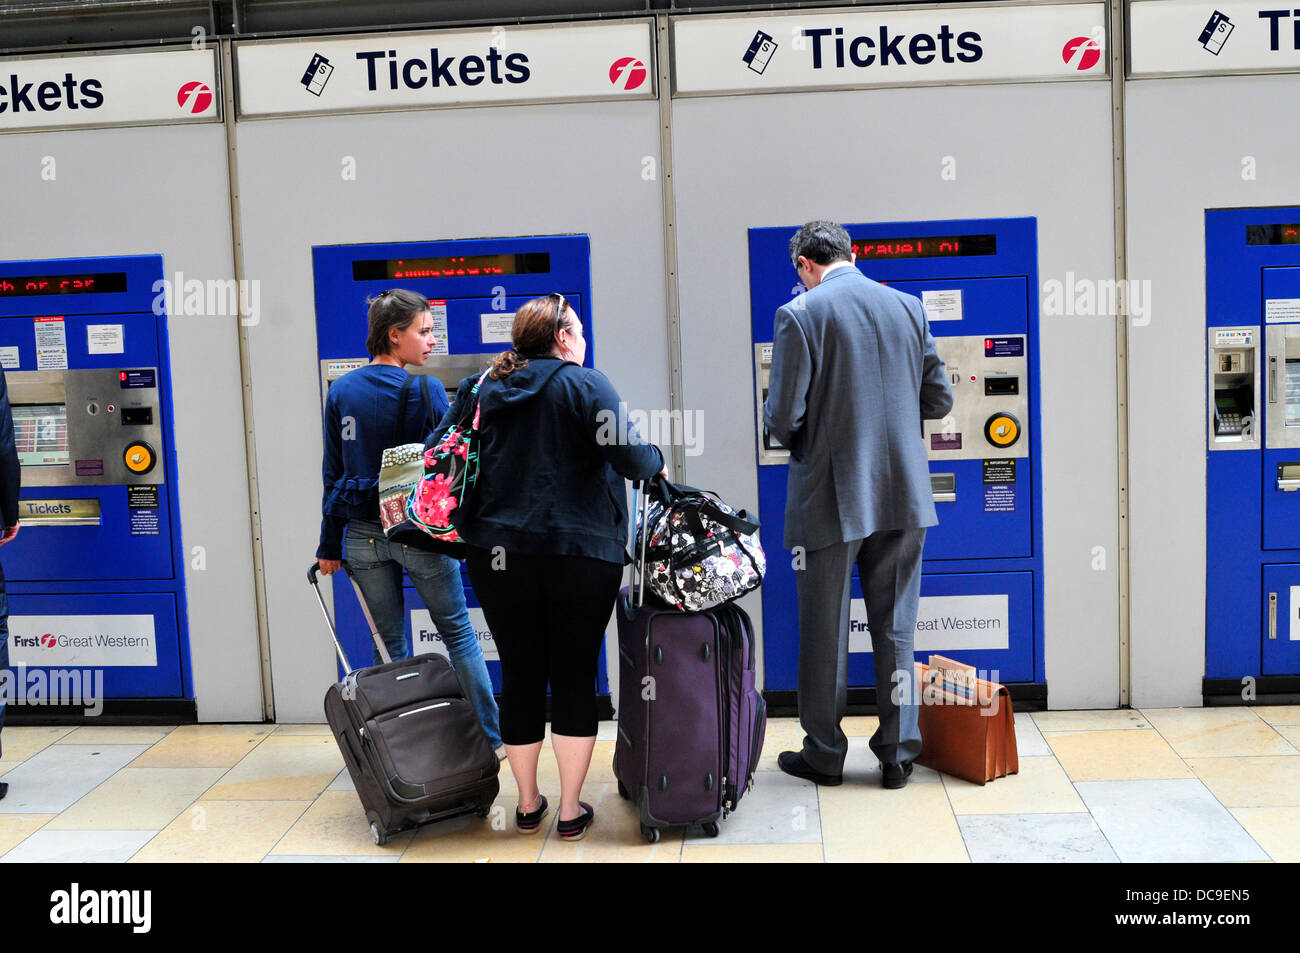 Los pasajeros intentando comprar entradas de vending máquinas expendedoras de billetes, Paddington, Londres, Reino Unido. Foto de stock